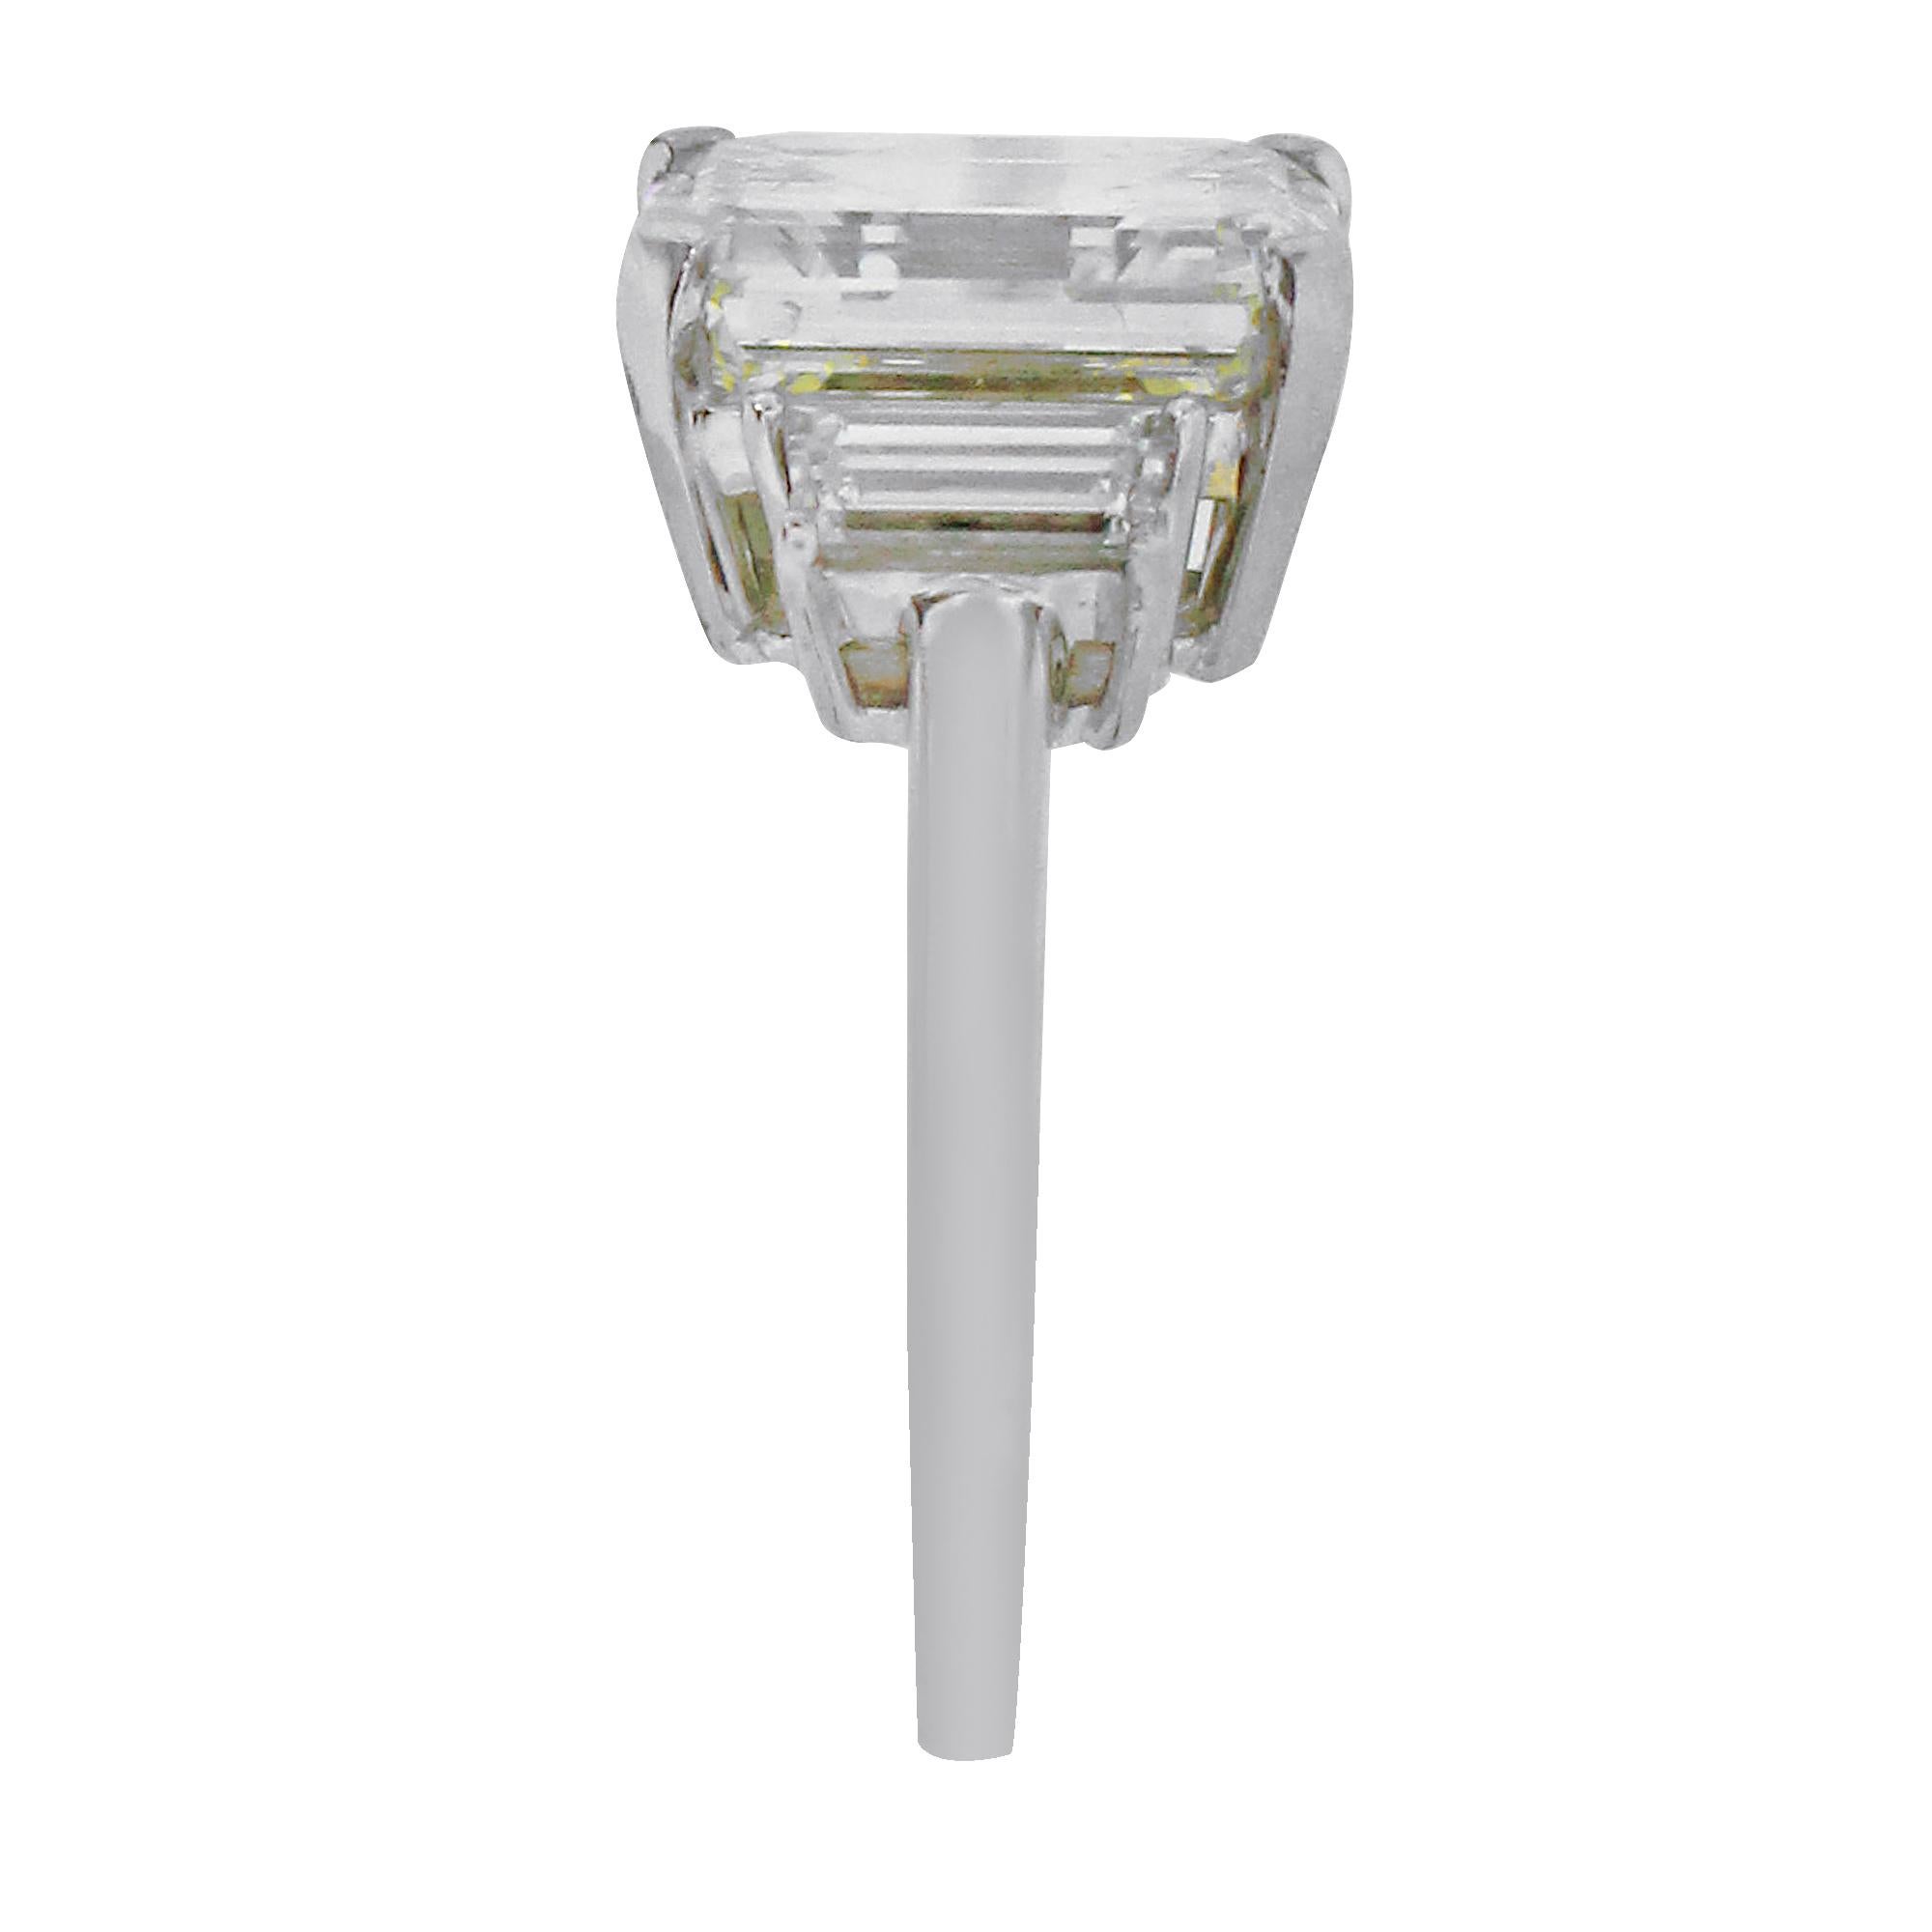 Material: Platinum
Center Diamond Details: 5.01ct Emerald Cut Diamond. Center diamond is M in color and SI2 in clarity.
Accent Diamond Details: Approximately 0.36ctw trapezoid diamonds. Accent diamonds are G in color and SI in clarity.
Ring Size: